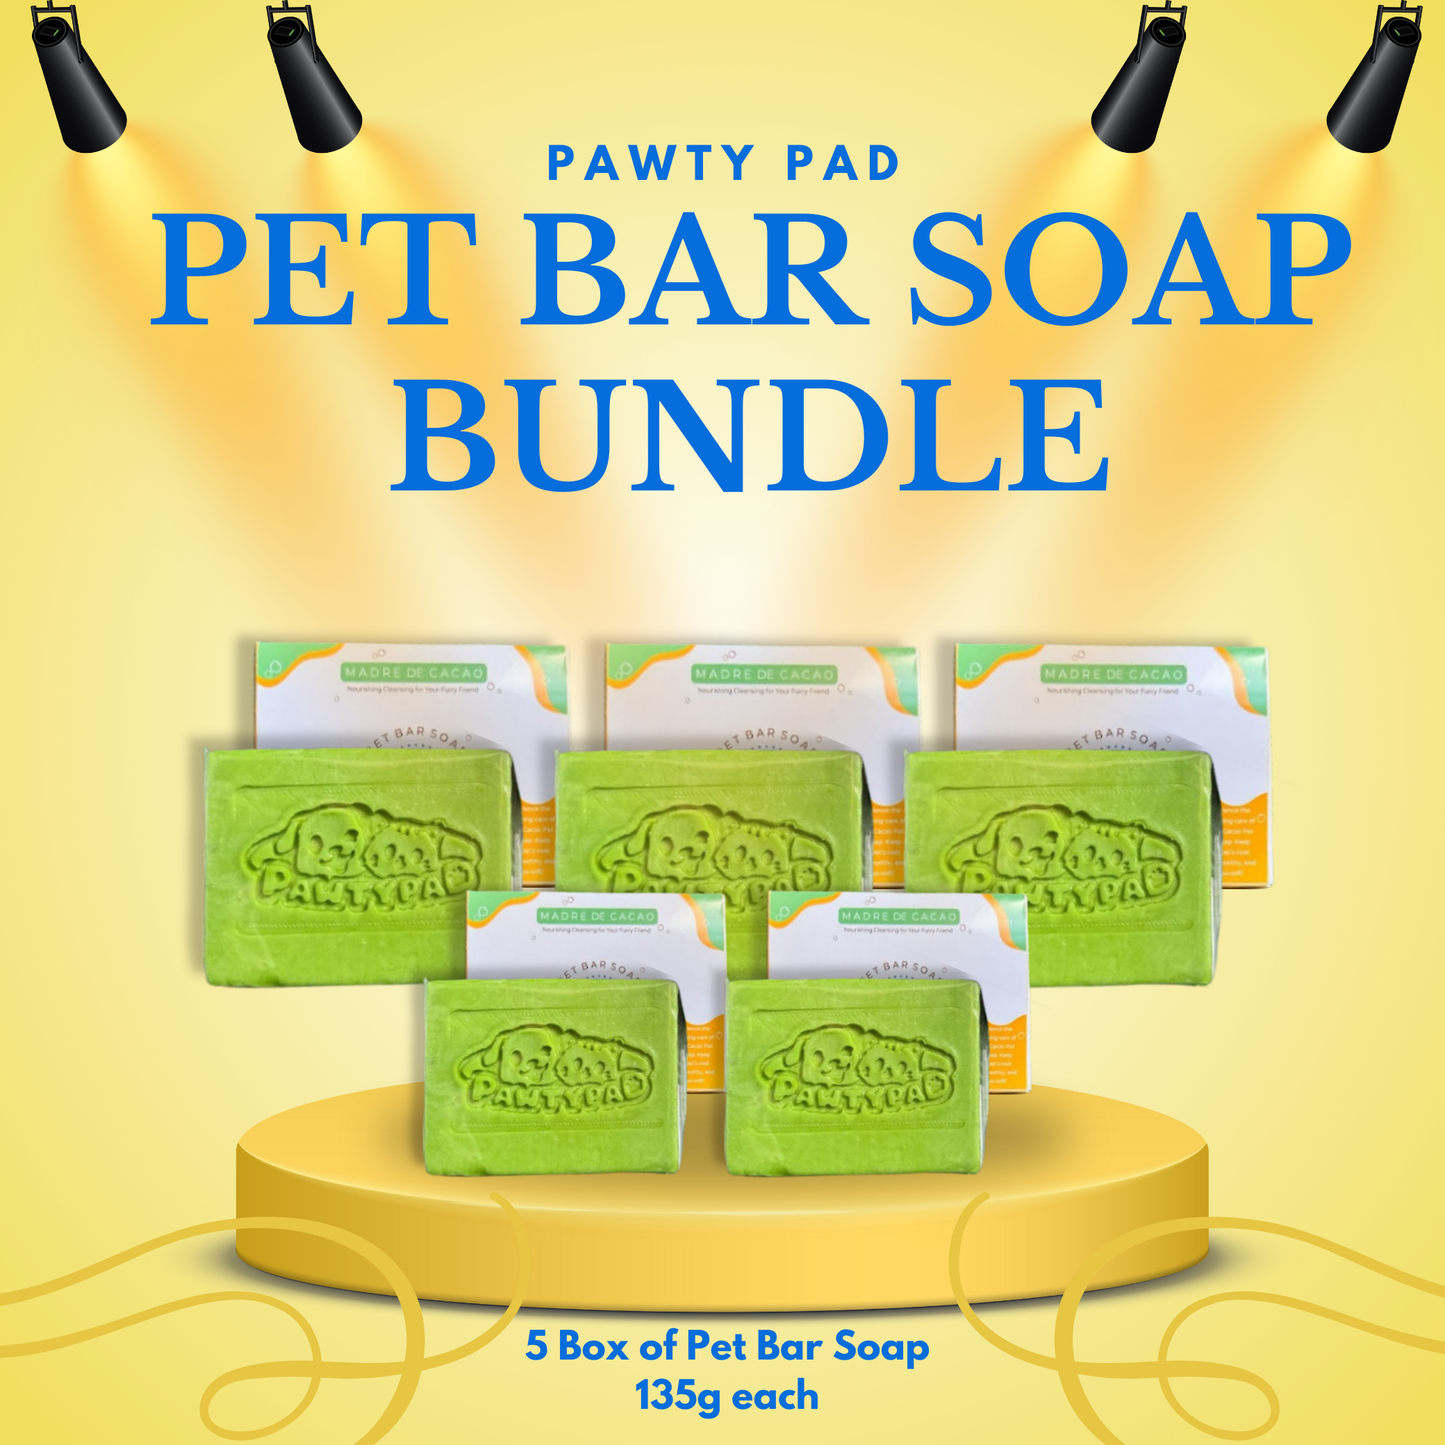 5 BarSoap - 135g Pawty Pad Pet Bar Soap